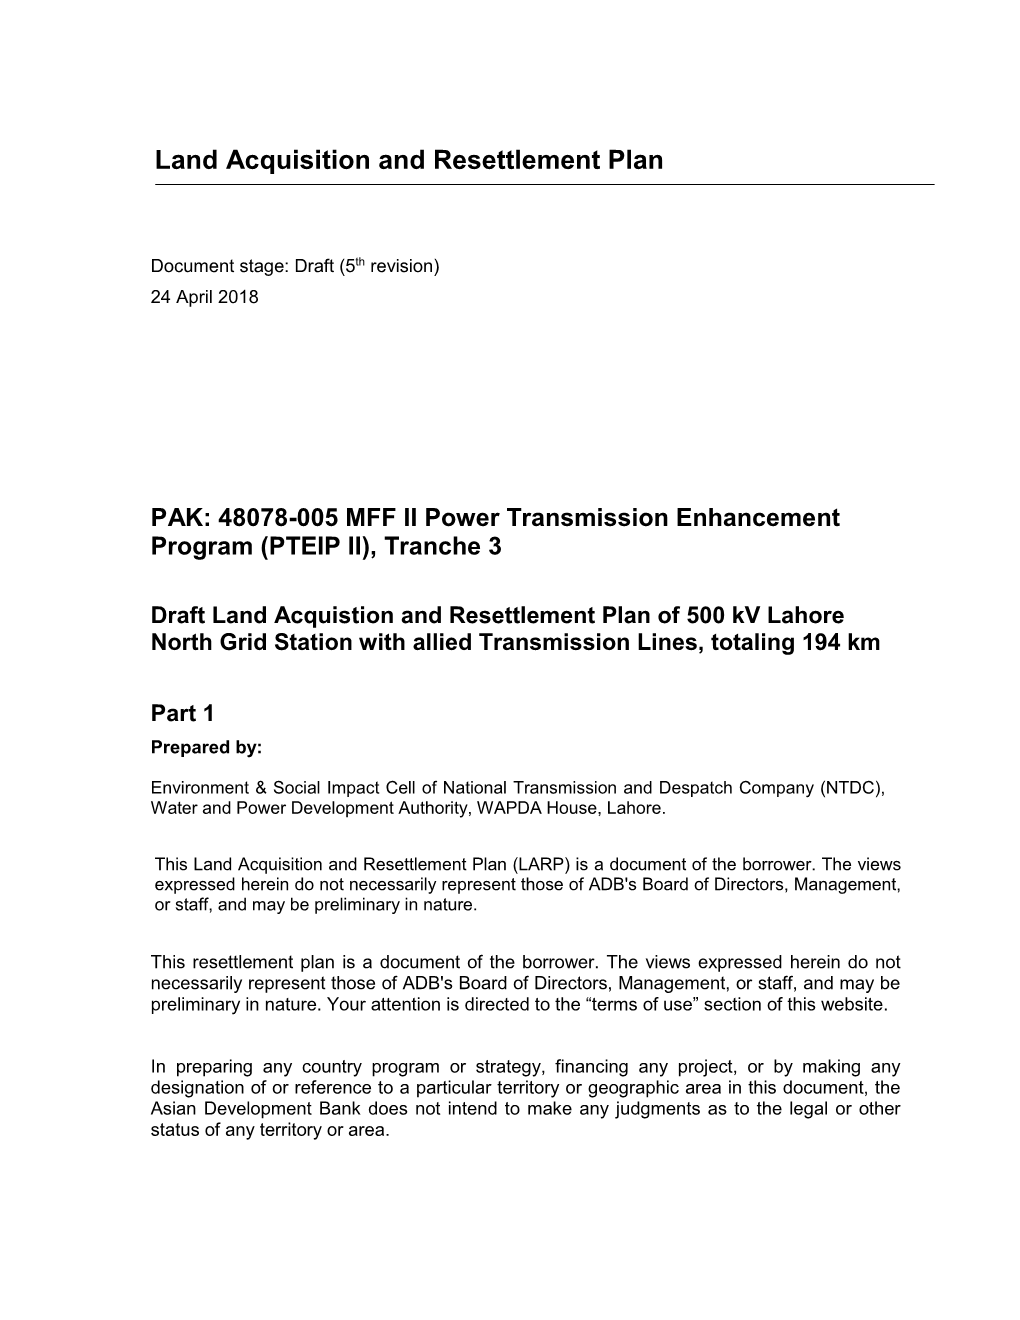 48078-005: Second Power Transmission Enhancement Investment